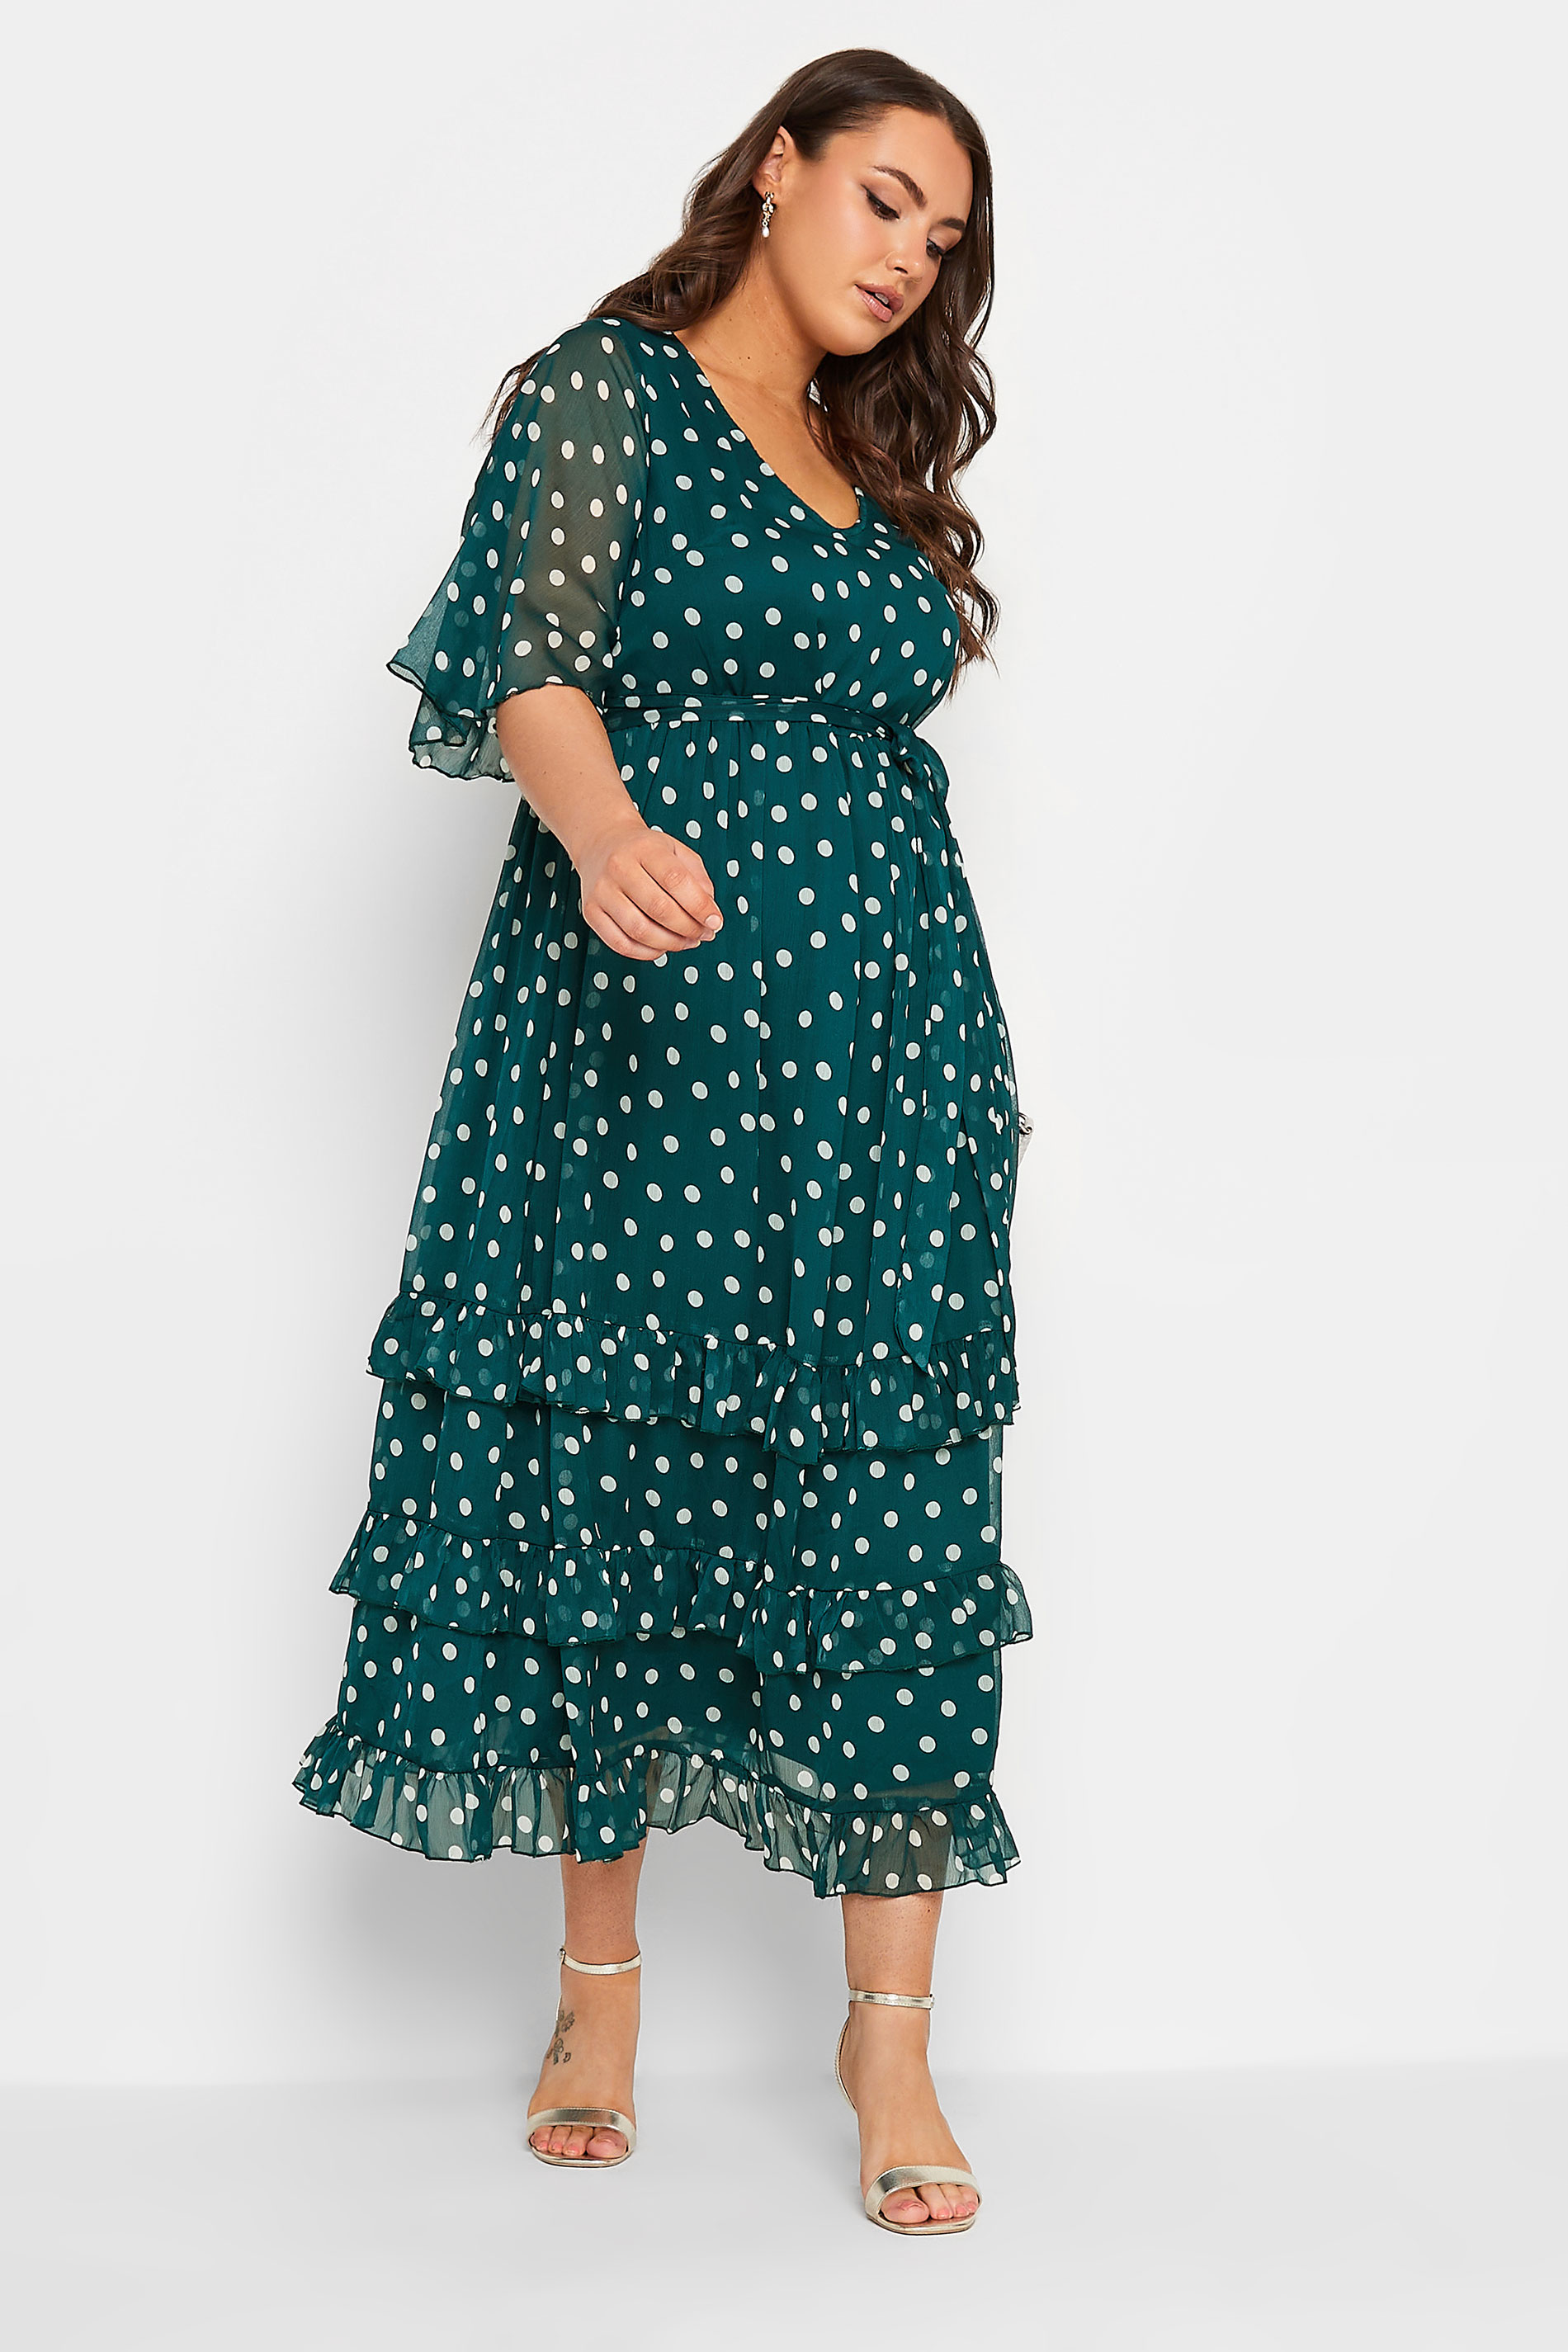 YOURS LONDON Plus Size Green Polka Dot Ruffle Maxi Dress | Yours Clothing 2